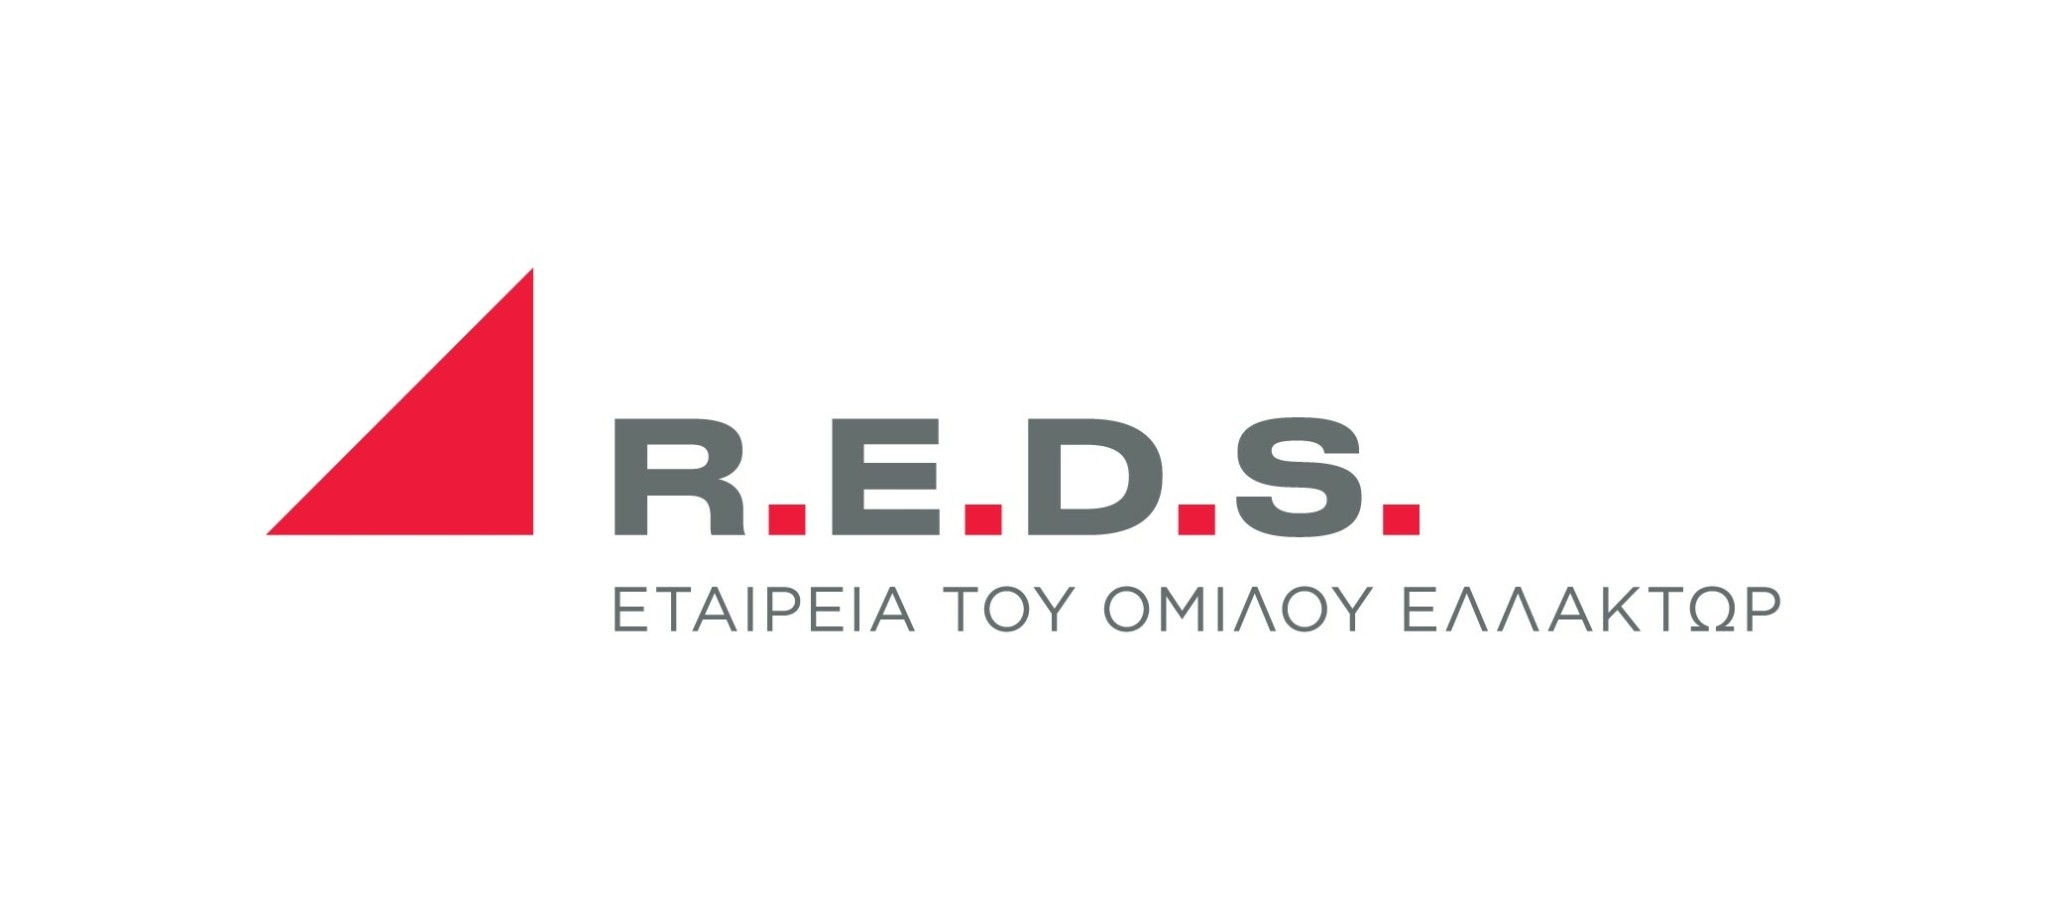 Reds: Σημαντική ενίσχυση της λειτουργικής κερδοφορίας, στα 6,6 εκατ. ευρώ τα EBITDA το 2022